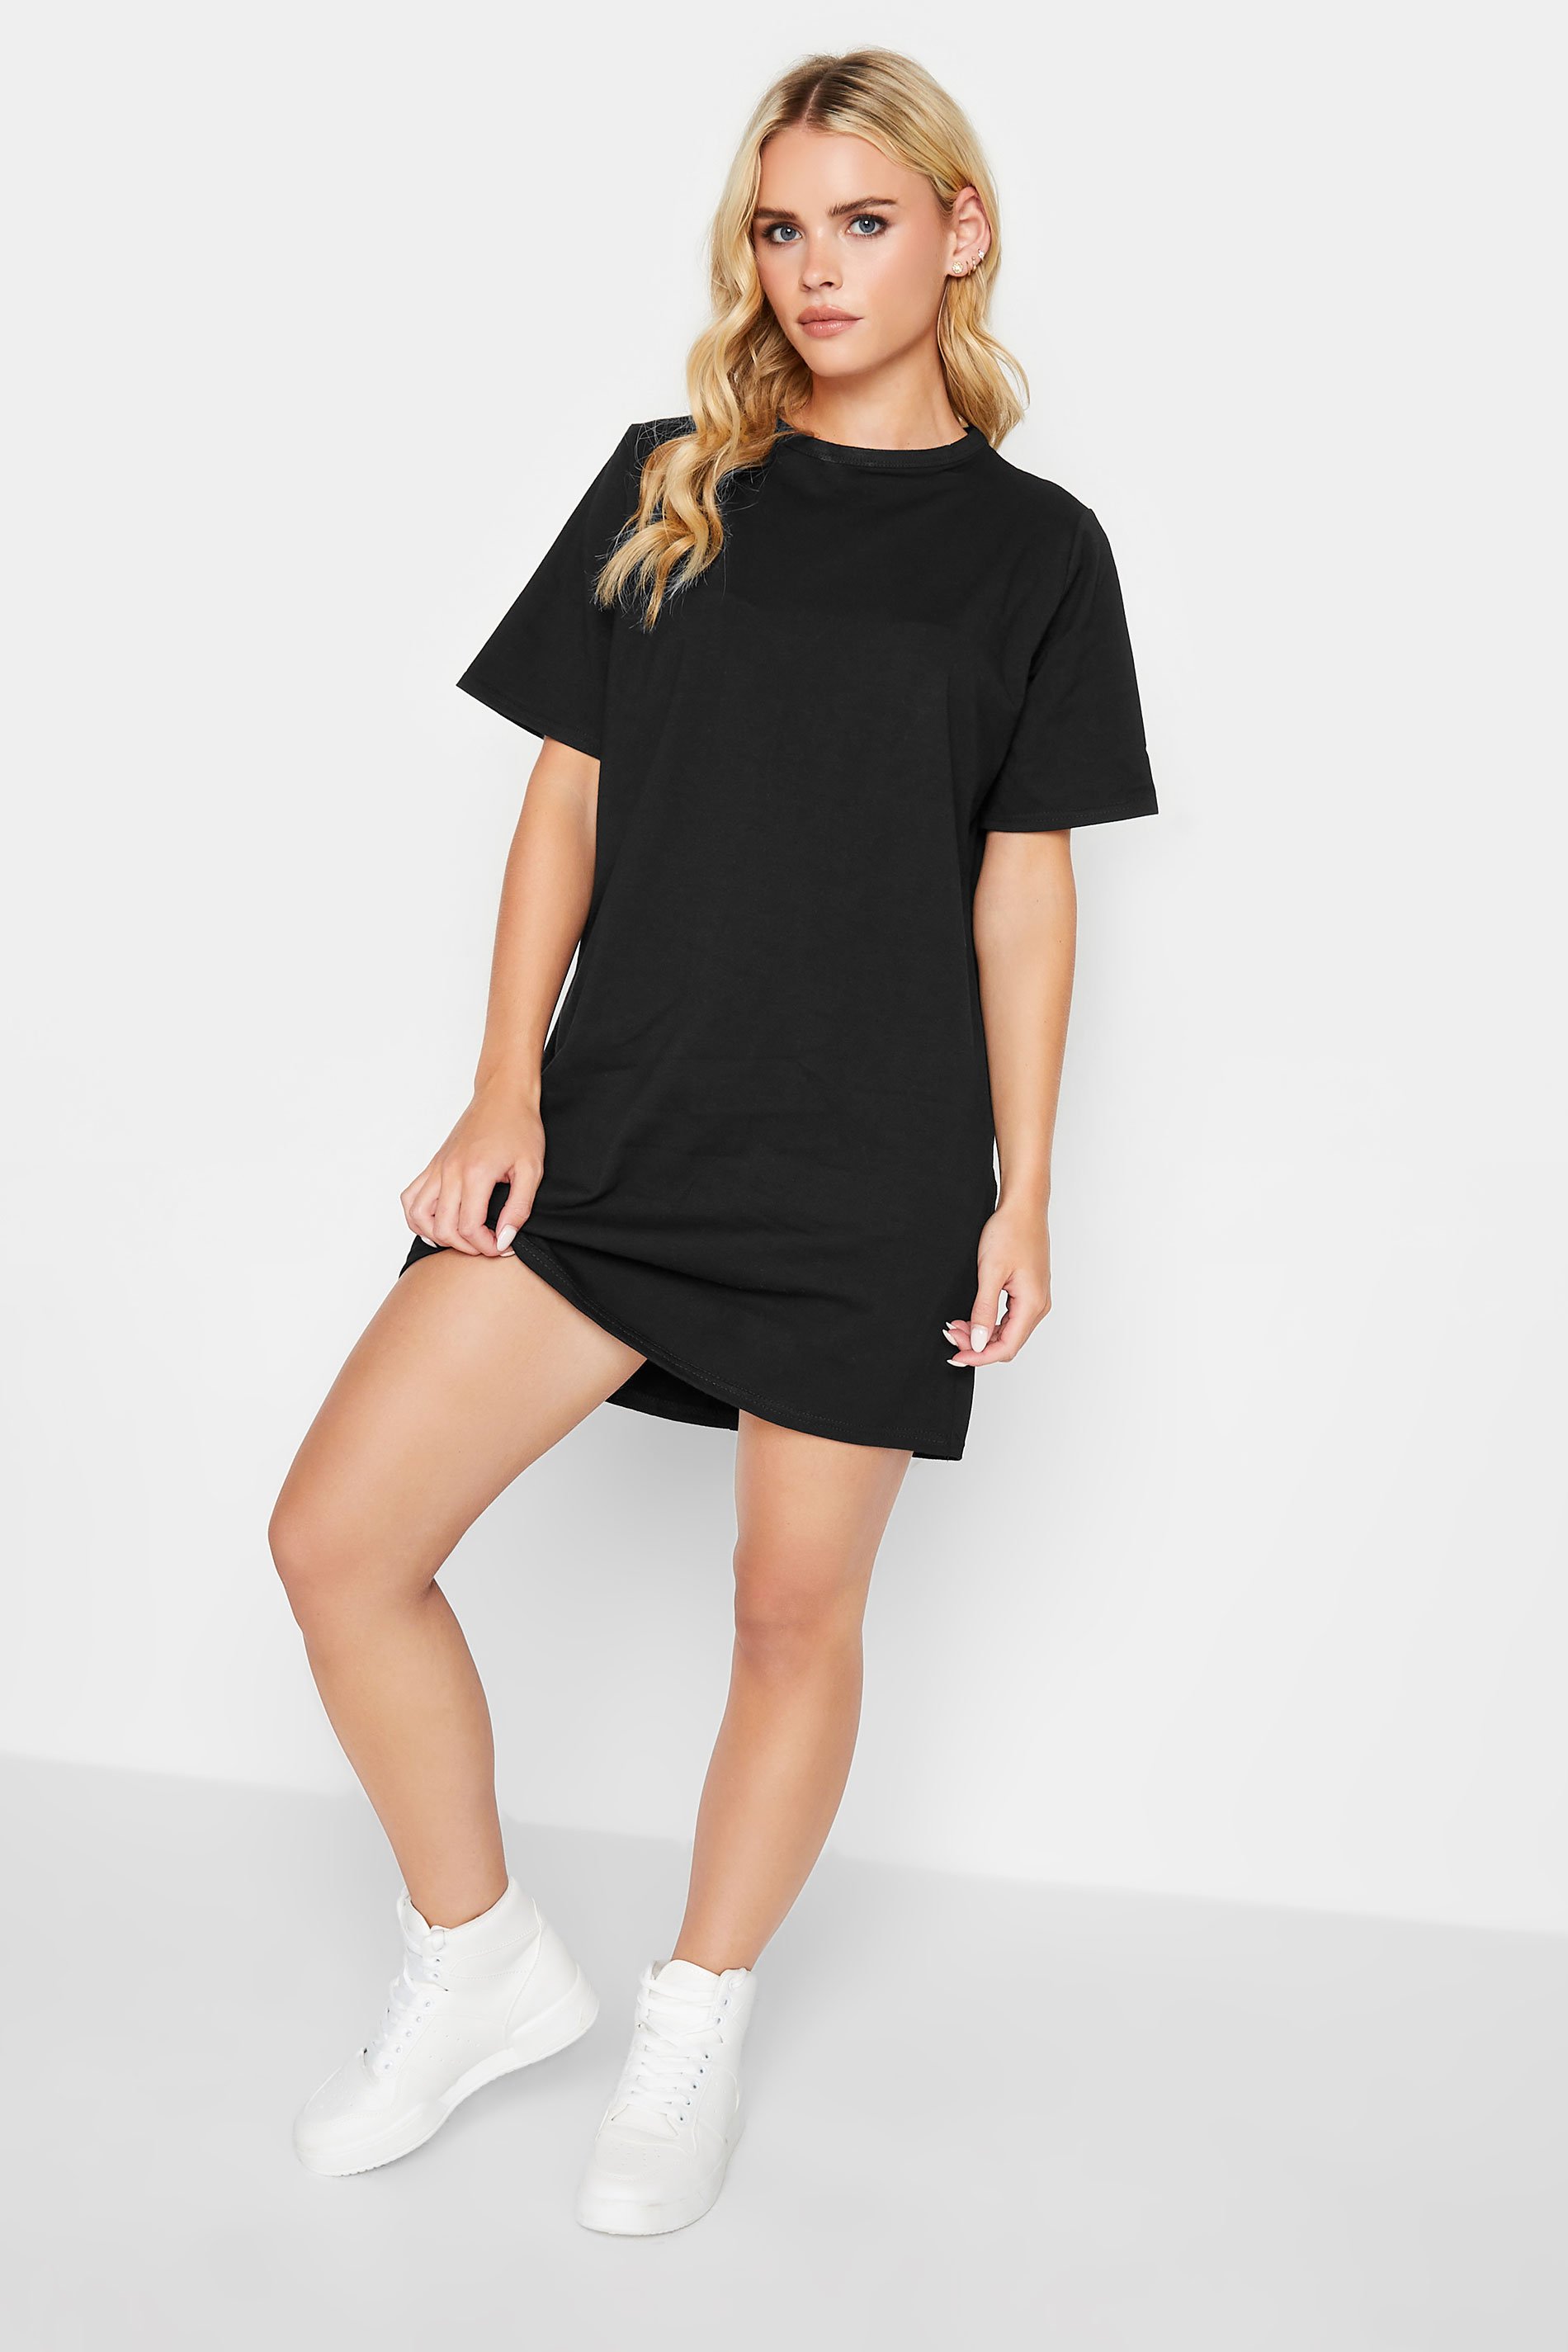 Petite Black Oversized T-Shirt Dress | PixieGirl  1